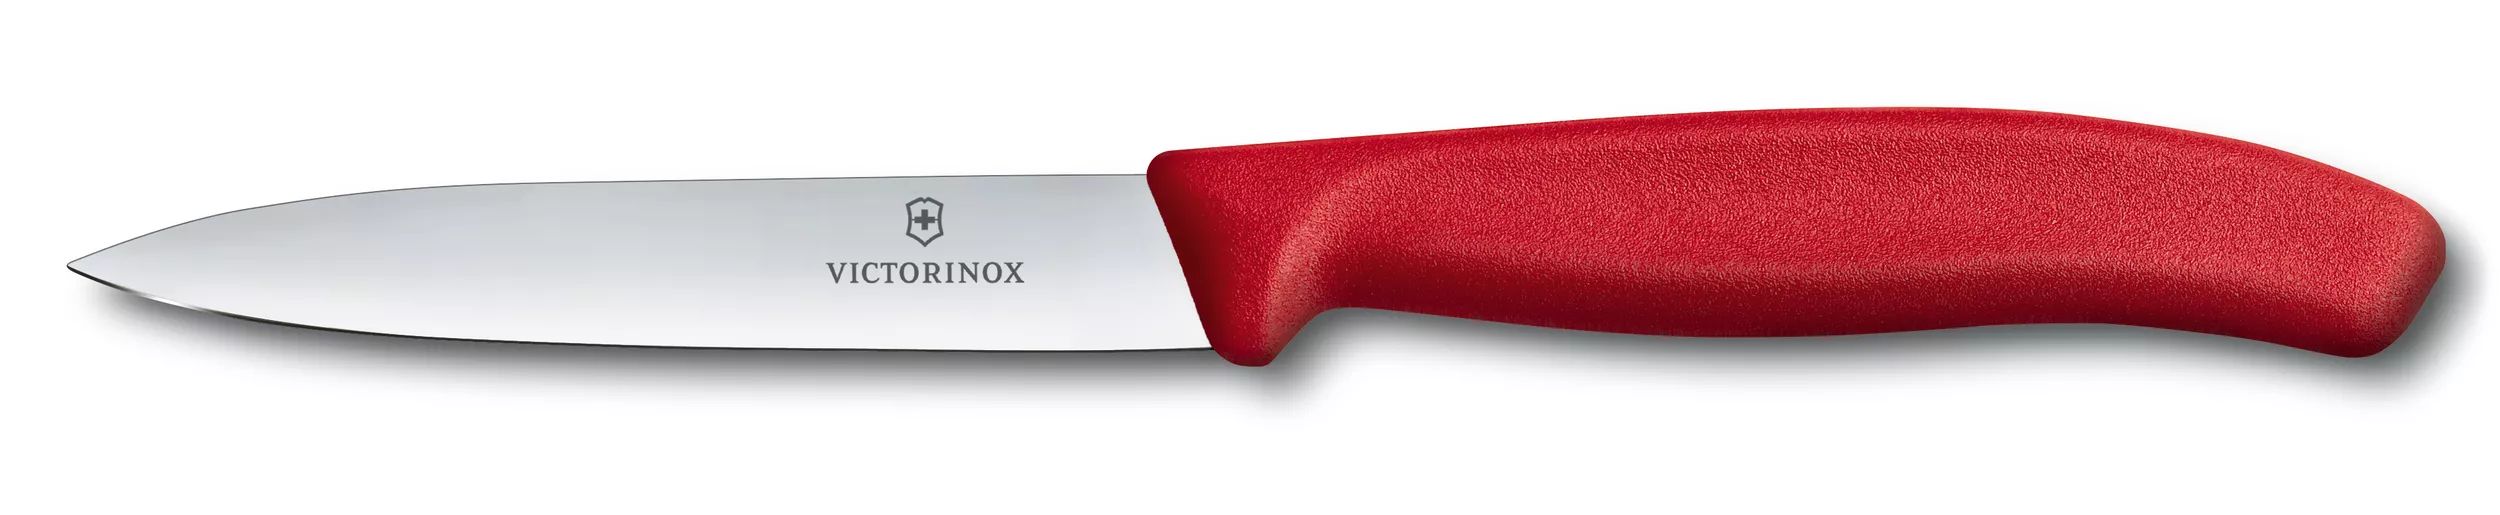 Swiss Classic Paring Knife-6.7701